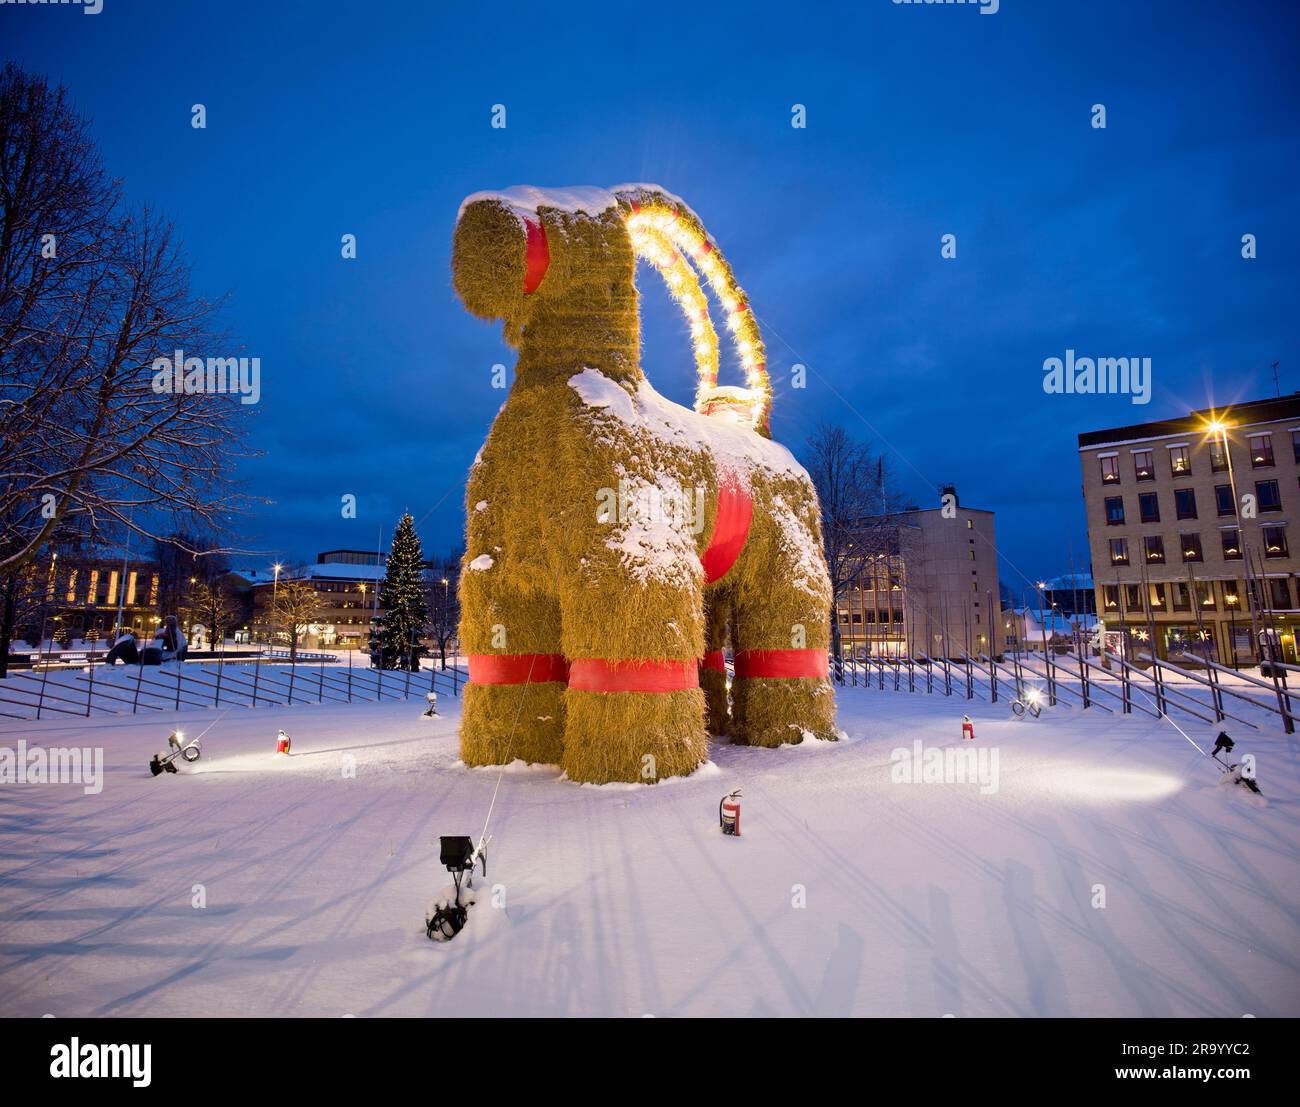 Julbocken (Yule goat) on snow covered landscape against blue sky during Christmas at Gavle, Sweden Stock Photo